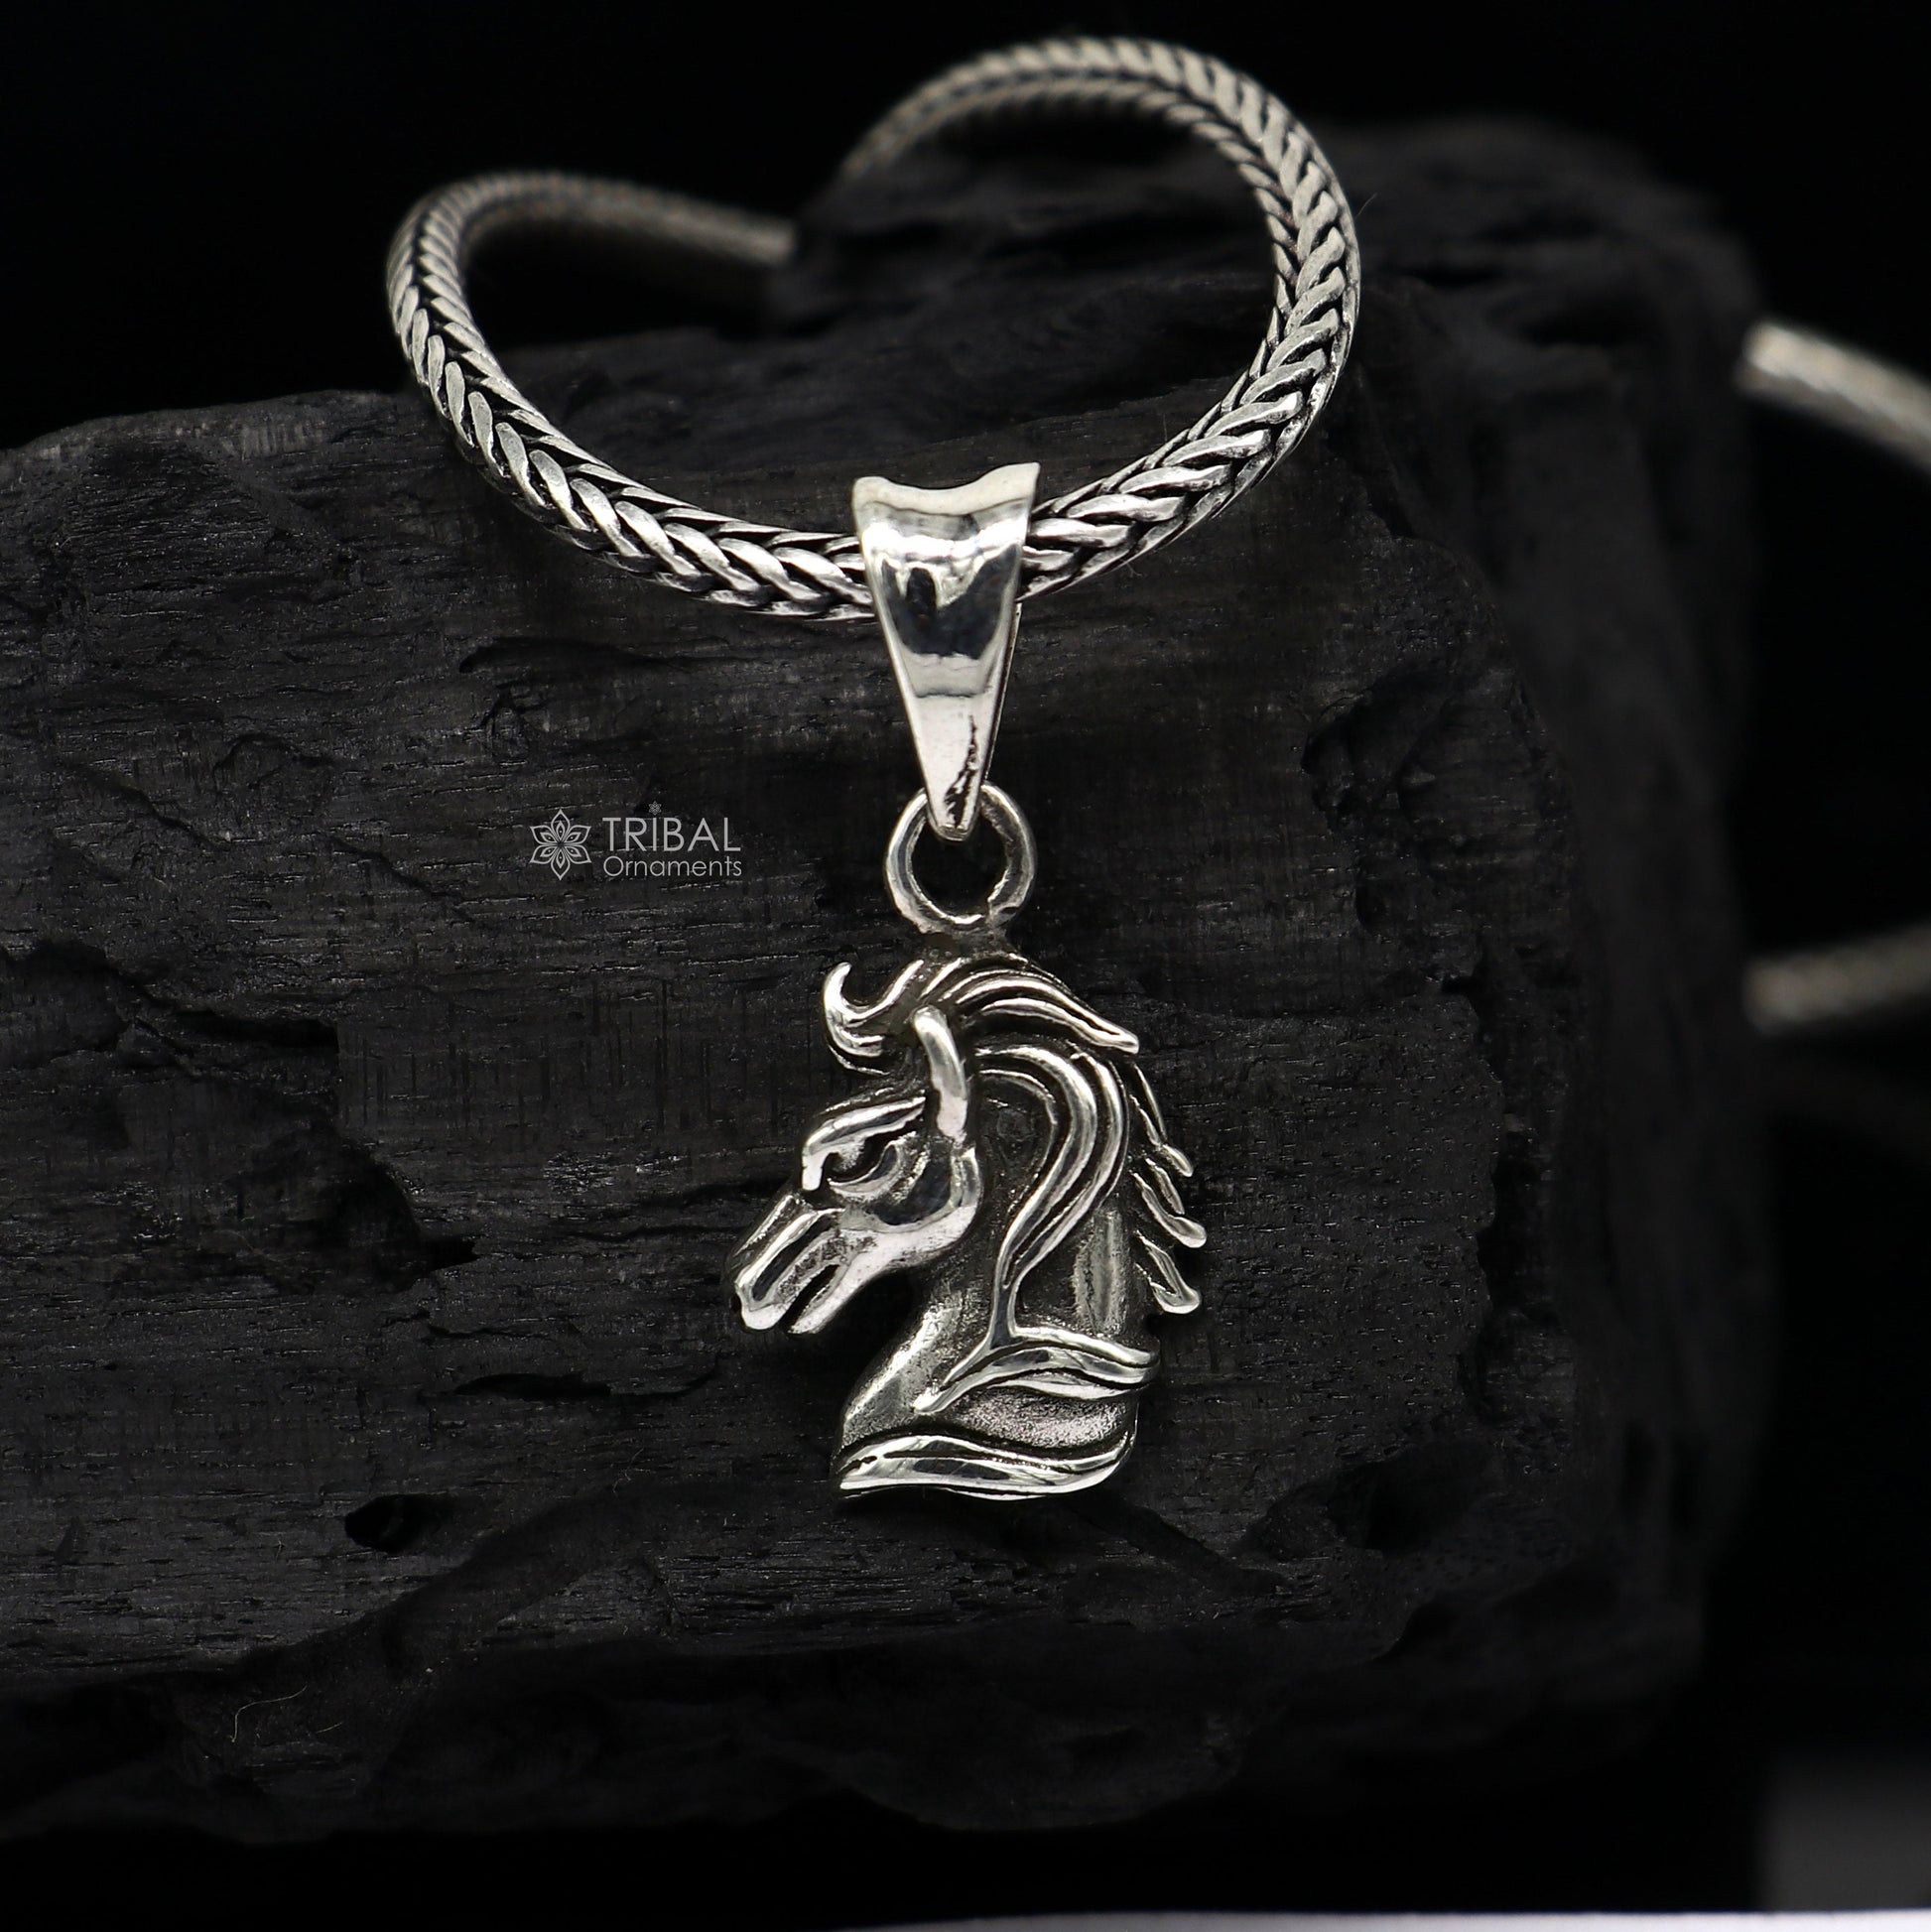 925 sterling silver horse pendant/ unicorn pendant/ Pegasus pendant unique stylish customized pendant necklace jewelry nsp704 - TRIBAL ORNAMENTS